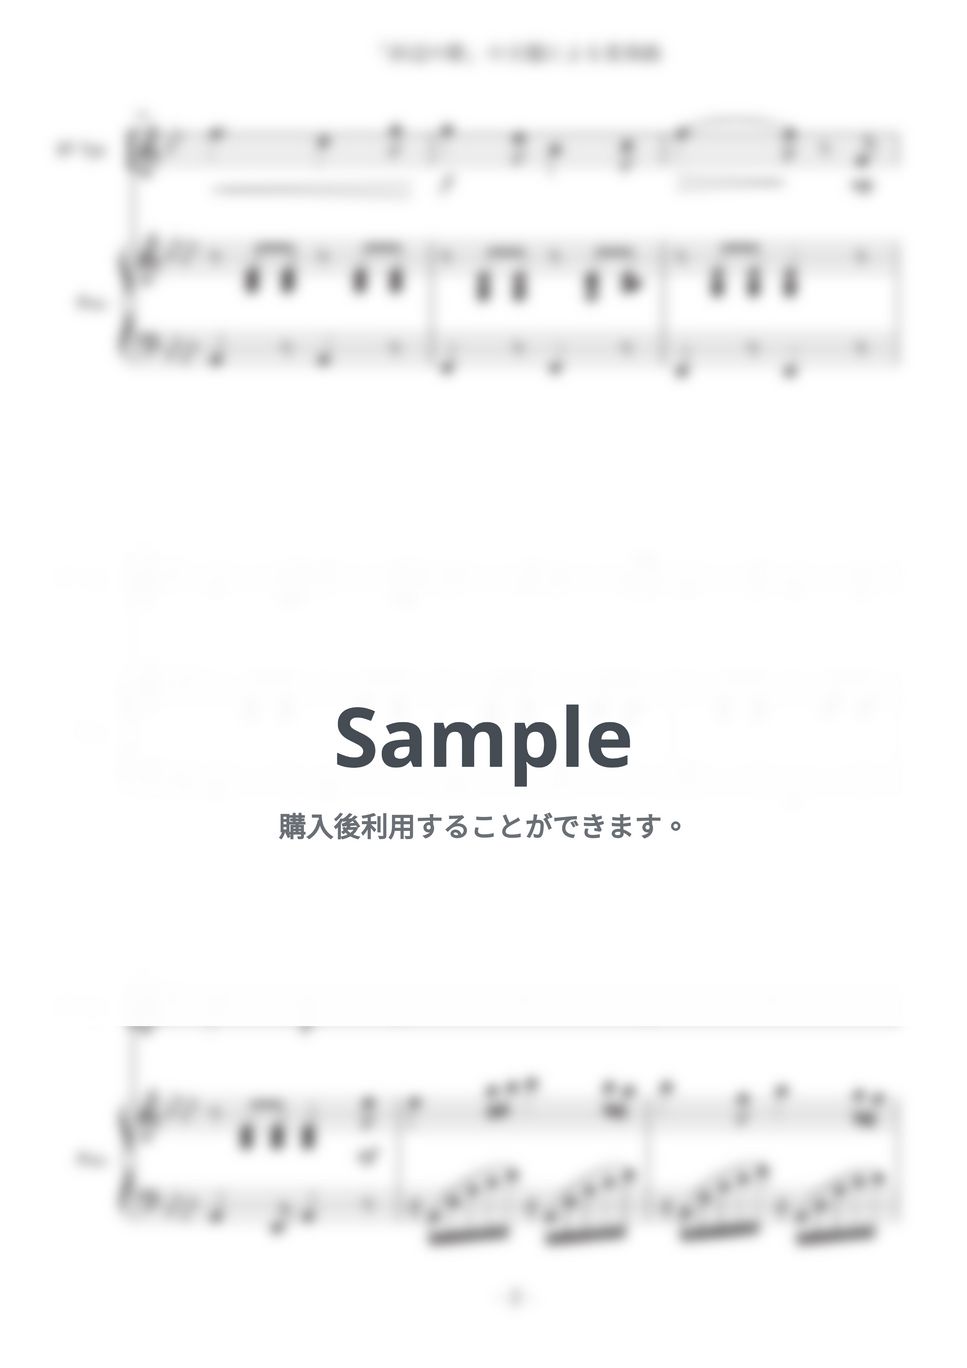 nick hosa - 【トランペットソロ】「浜辺の歌」の主題による変奏曲 (トランペットソロ（ピアノ伴奏）)